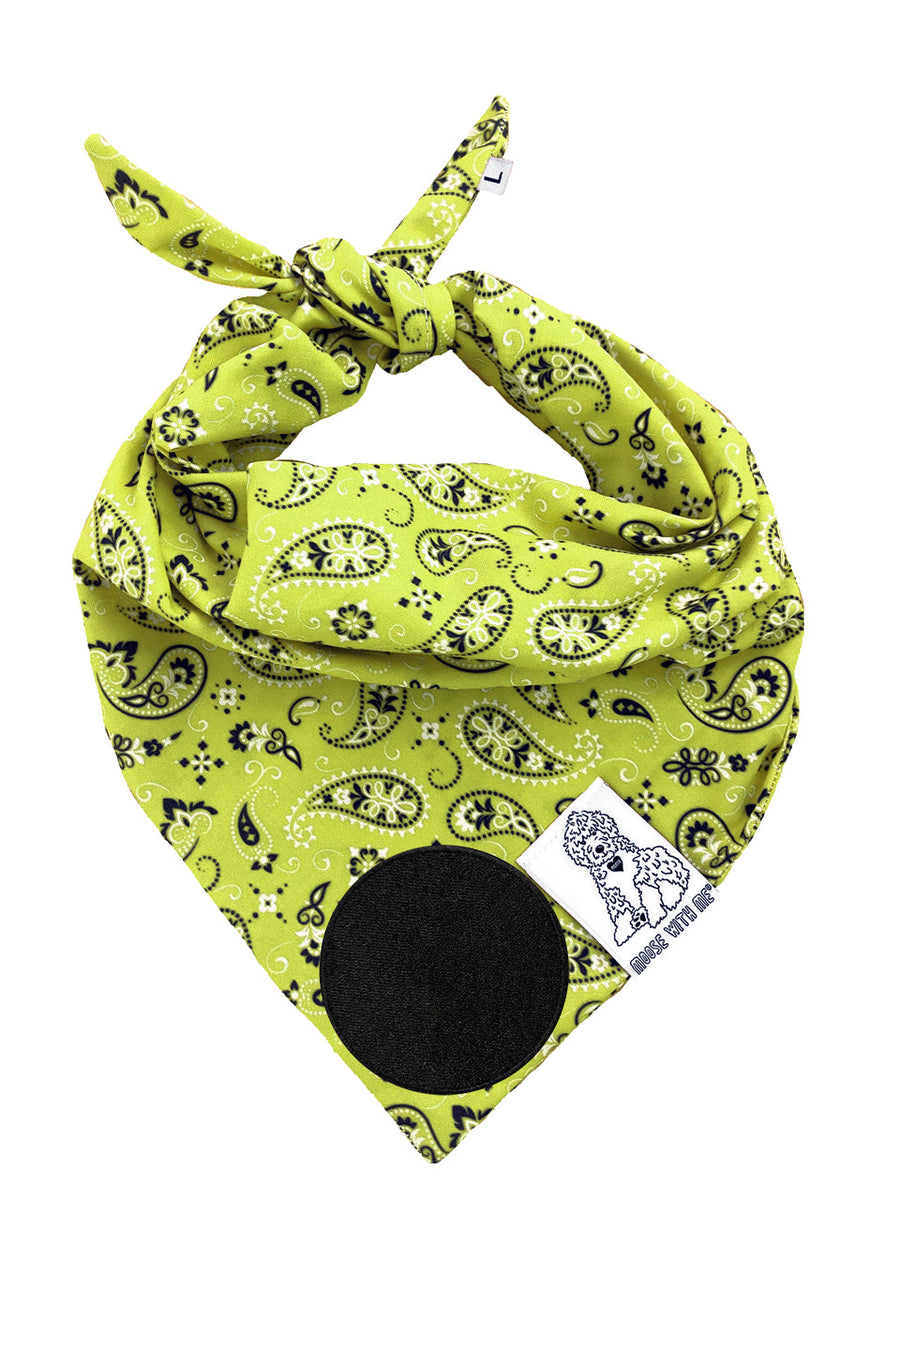 Dog Bandana Paisley - Customize with Interchangeable Velcro Patches